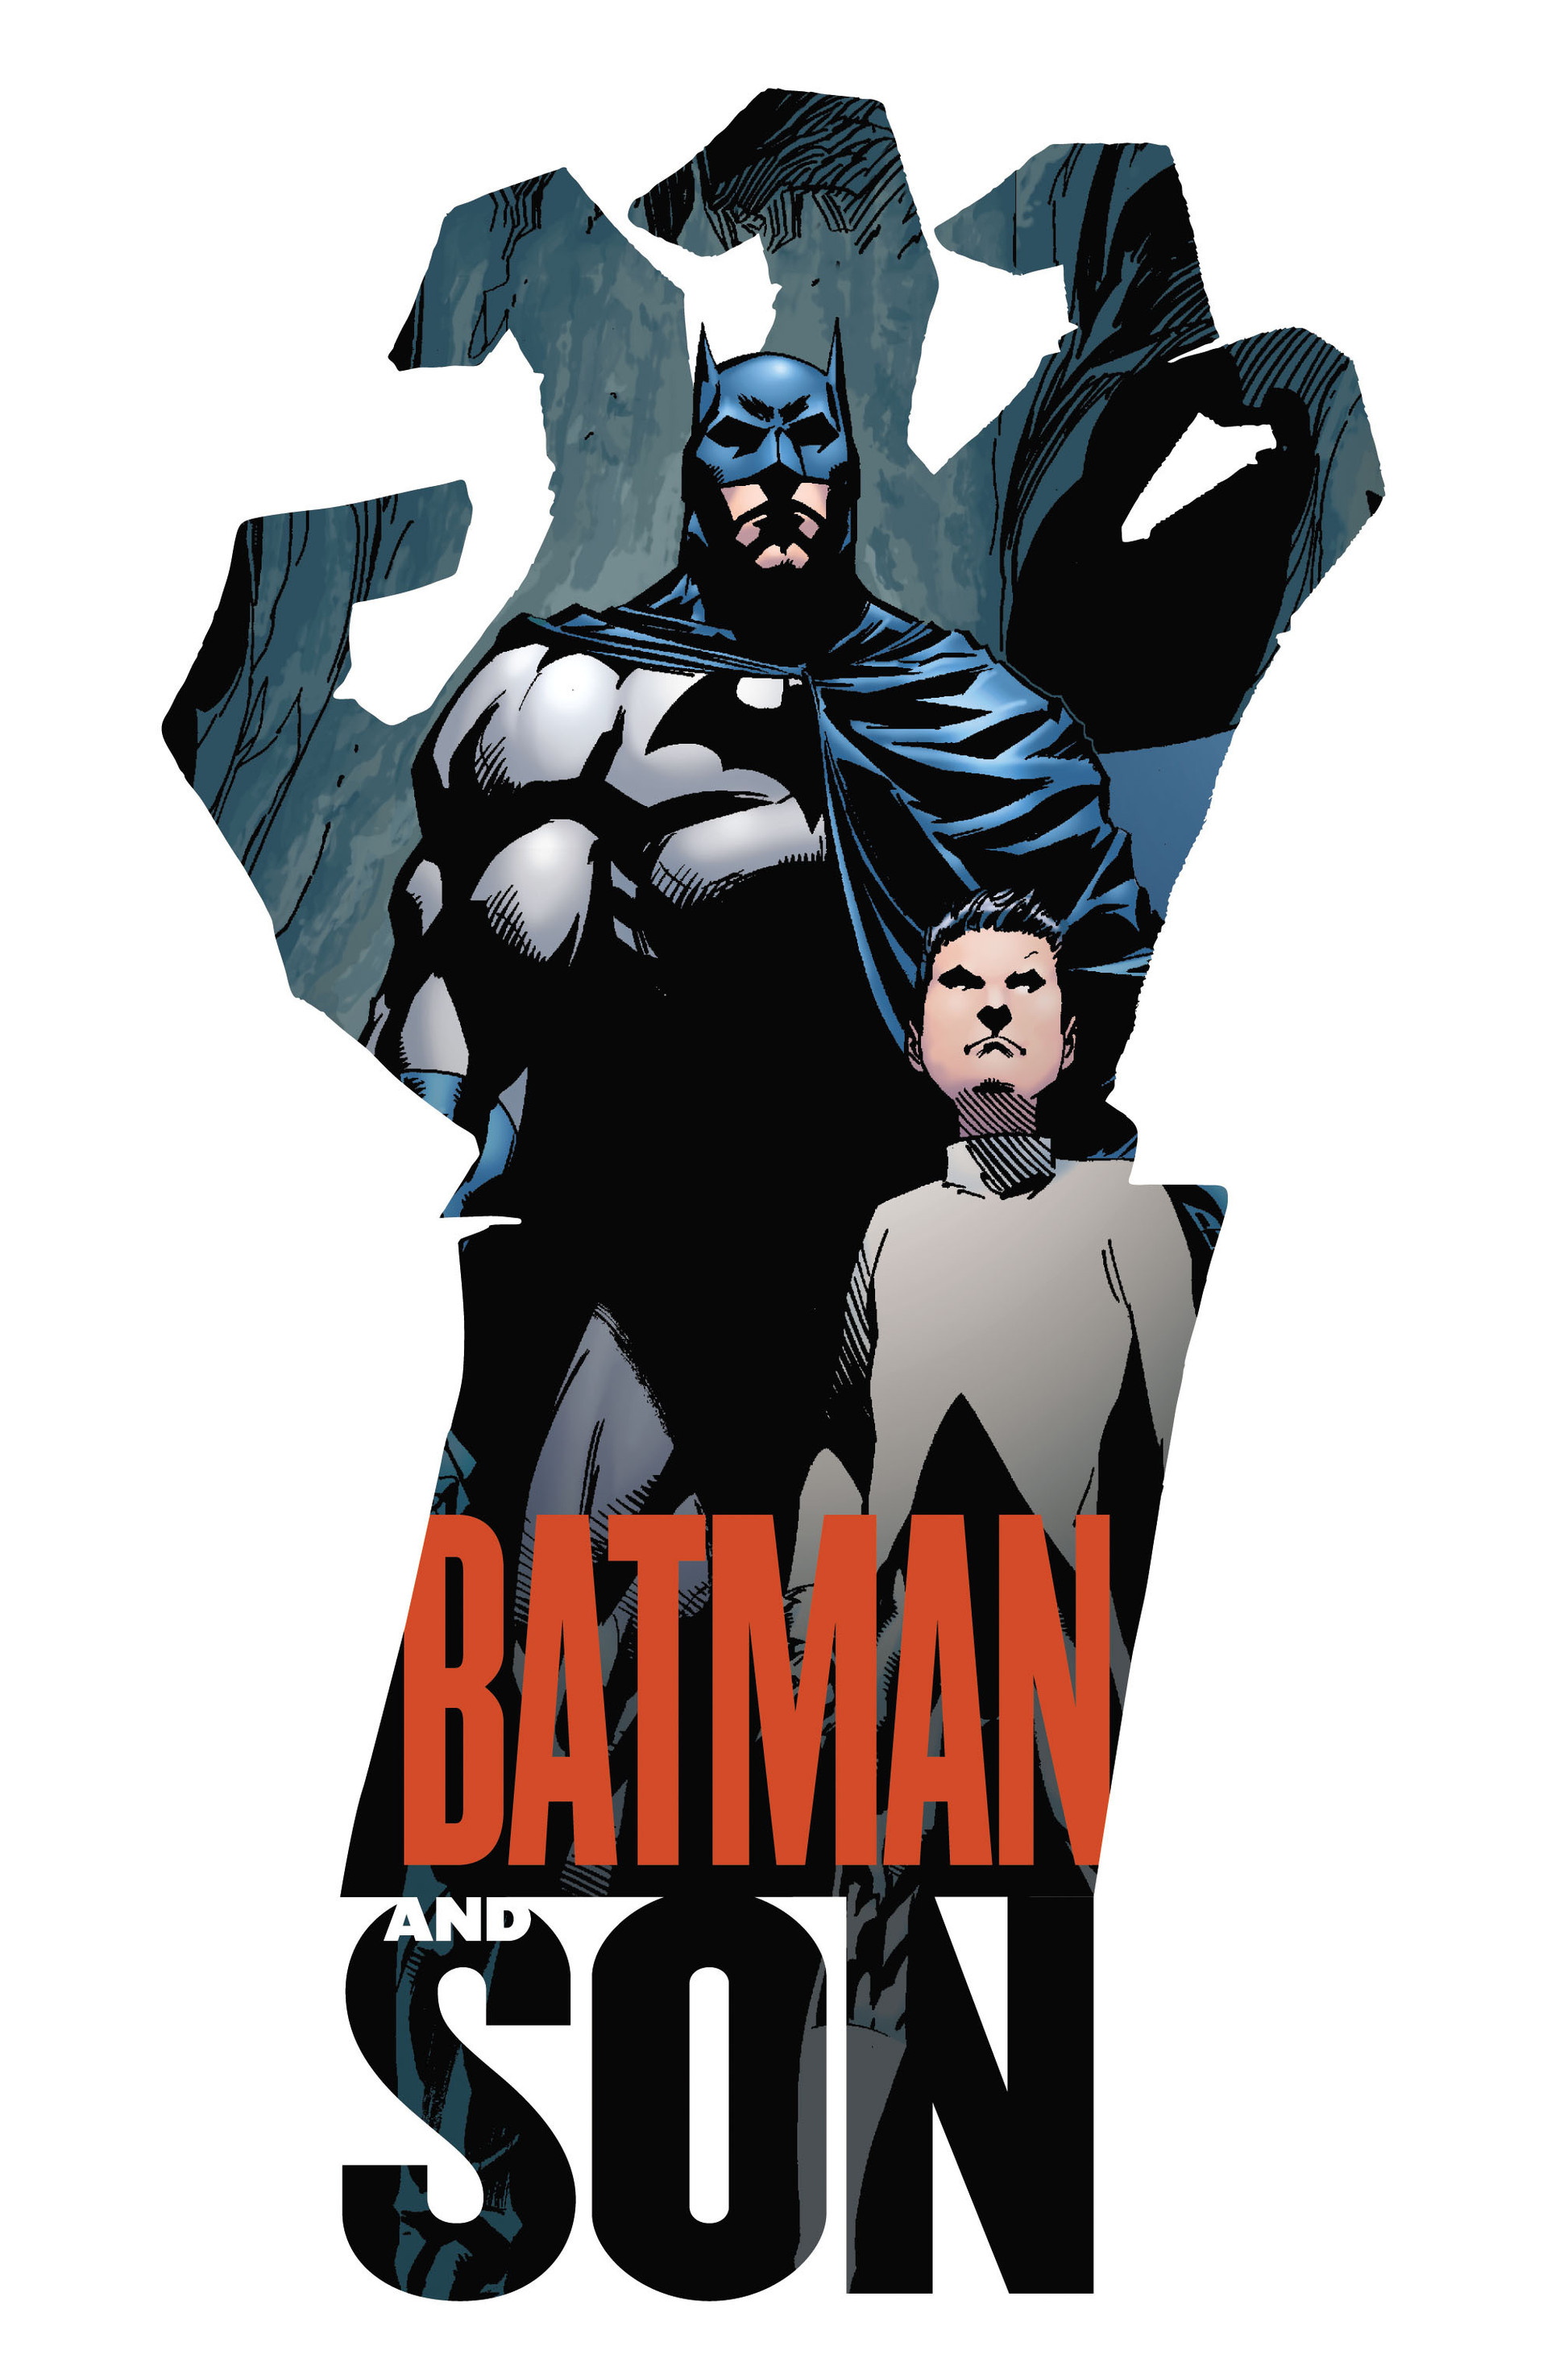 Batman Batman And Son Full | Read Batman Batman And Son Full comic online  in high quality. Read Full Comic online for free - Read comics online in  high quality .| READ COMIC ONLINE